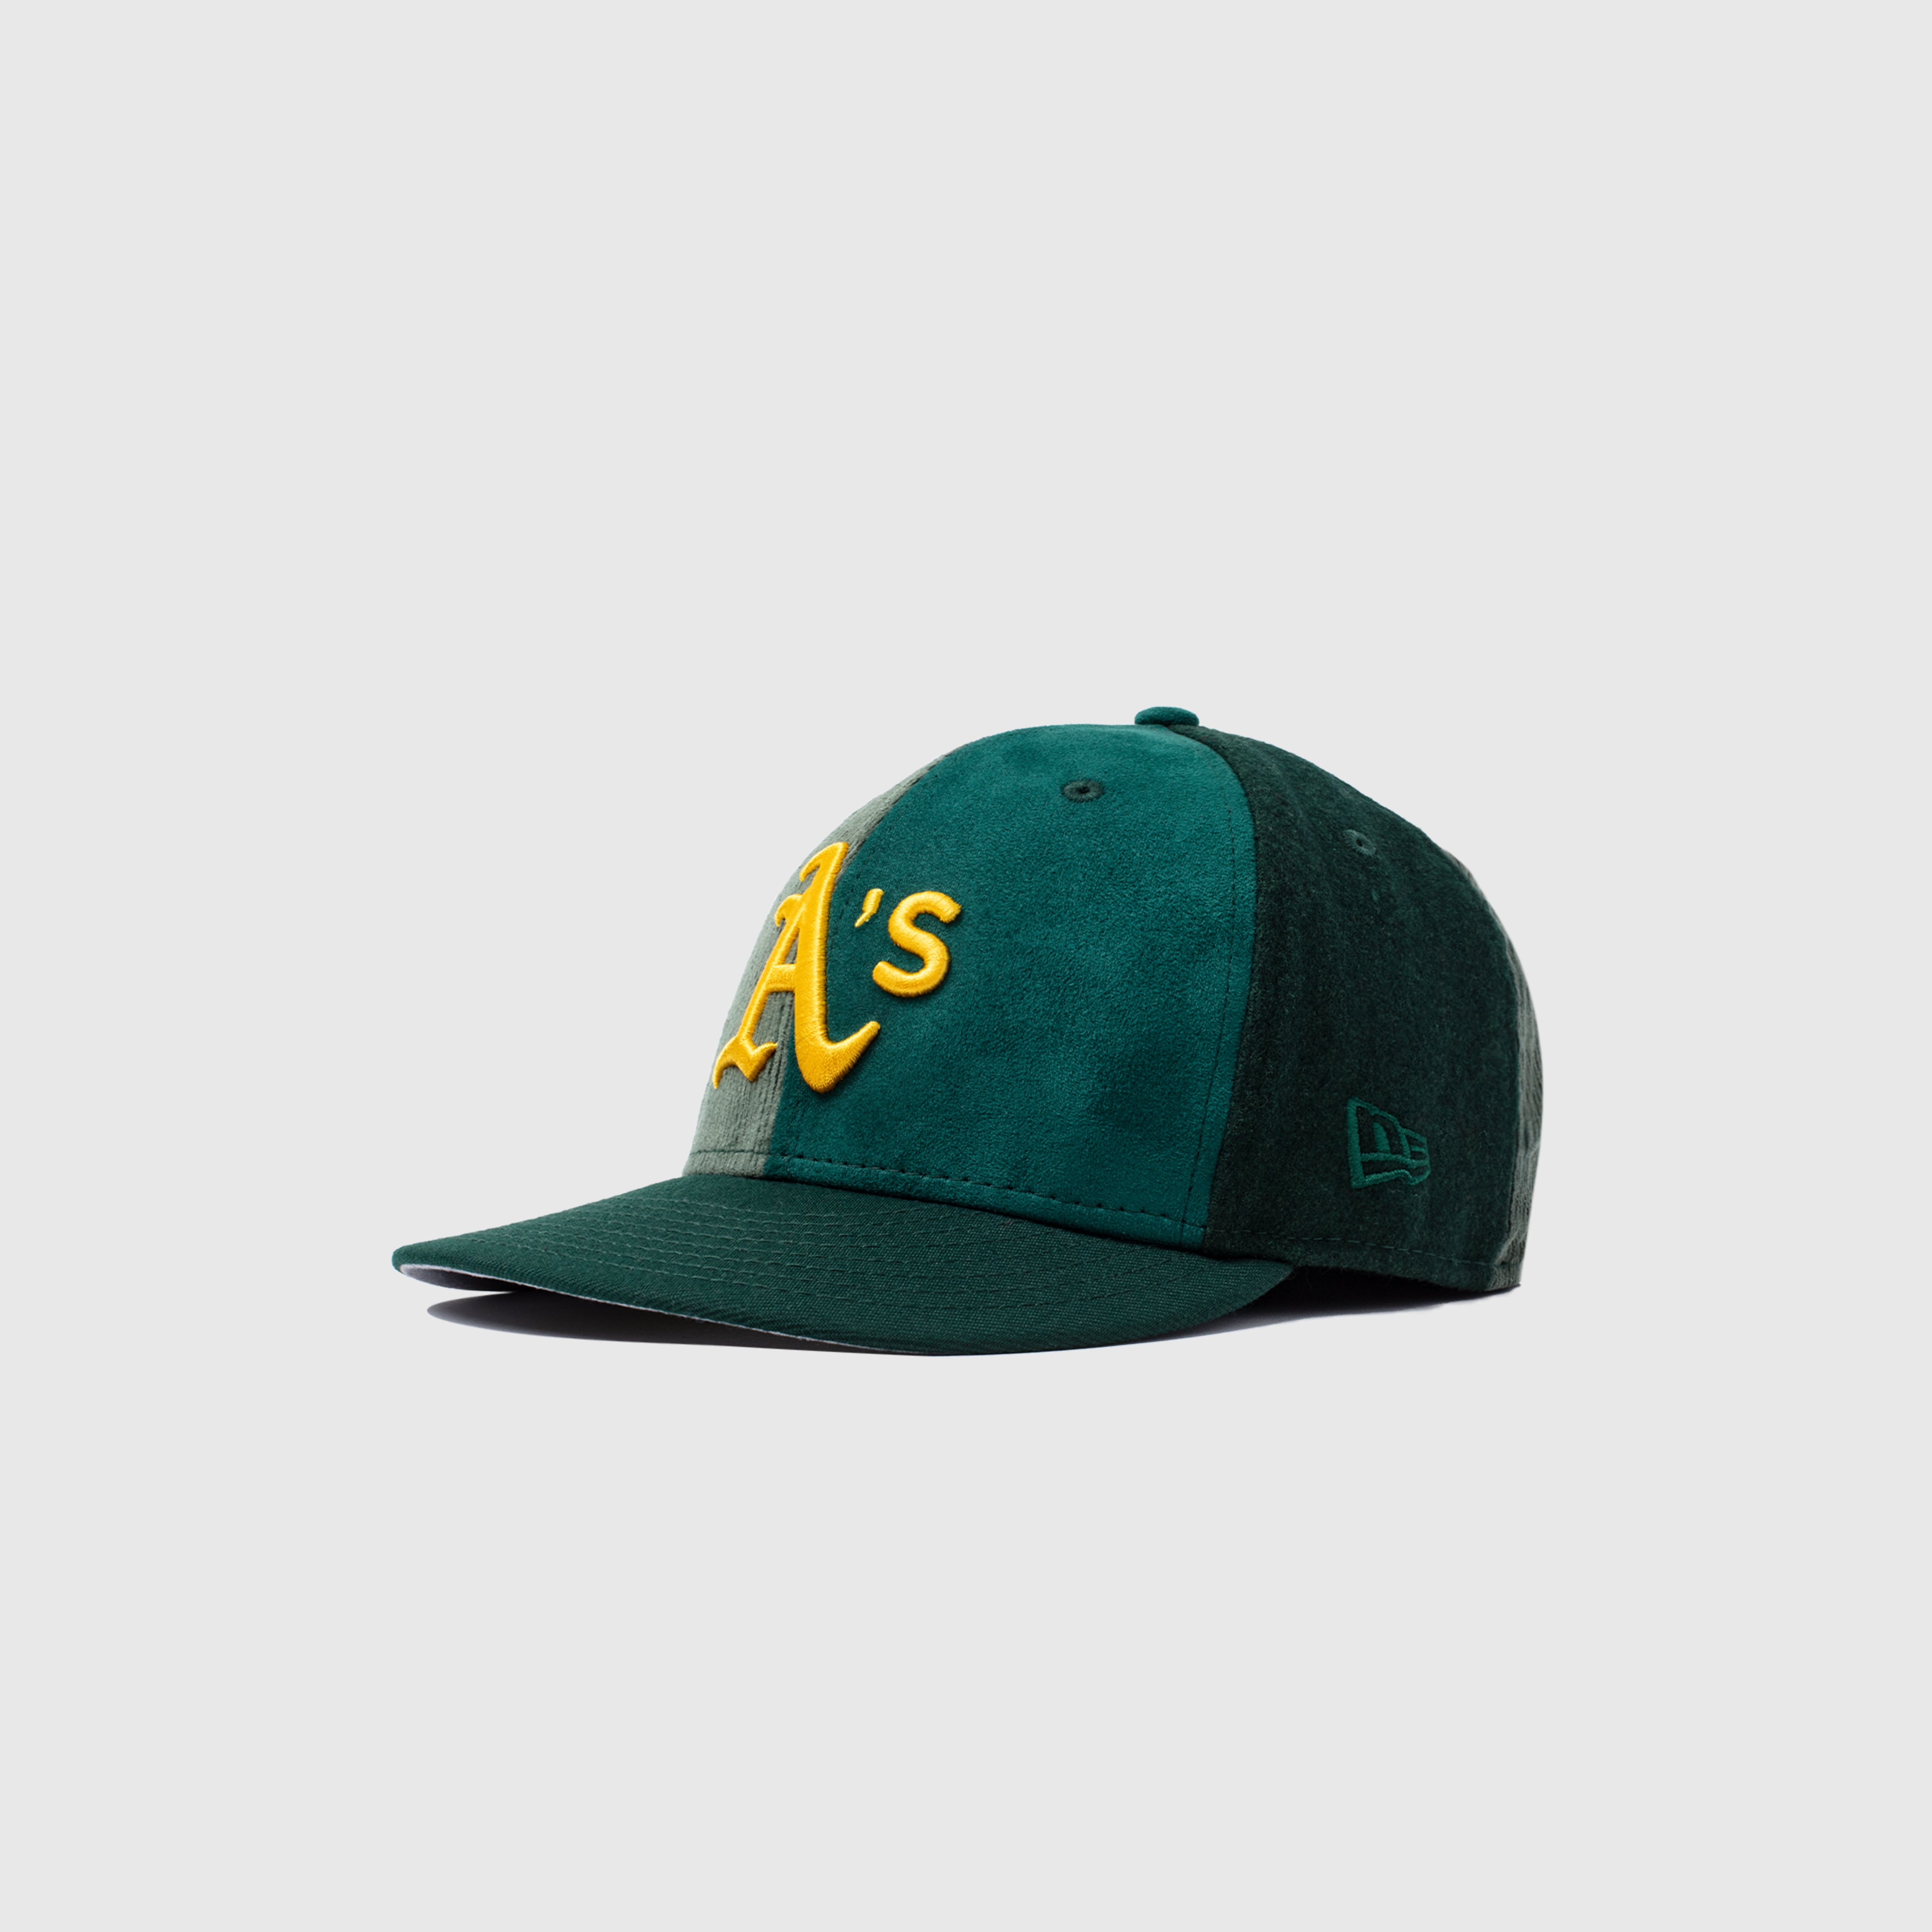 Oakland Athletics Hats & Apparel